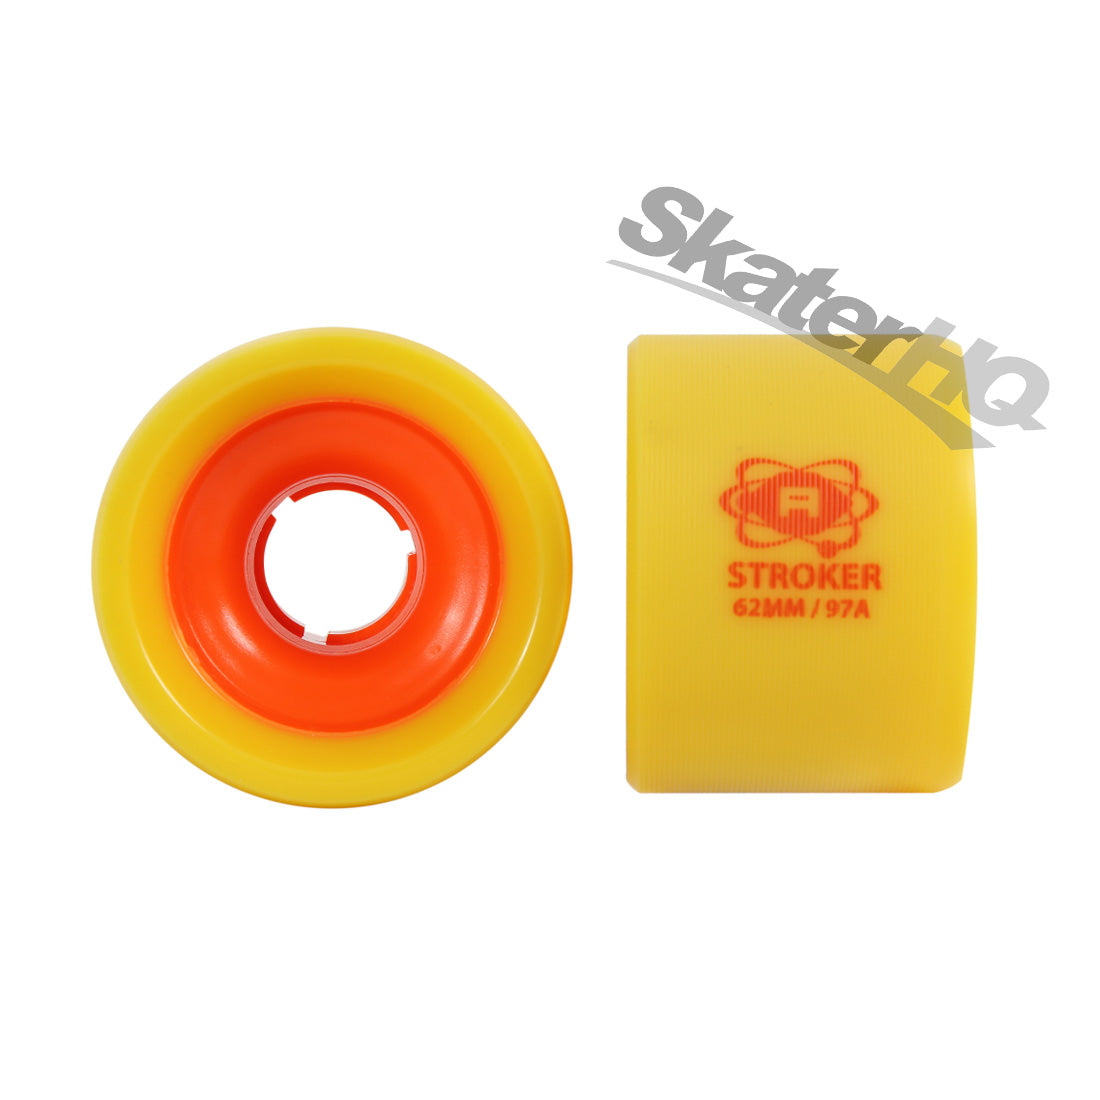 Atom Stroker 62x44mm/97A 8pk - Yellow/Orange Roller Skate Wheels